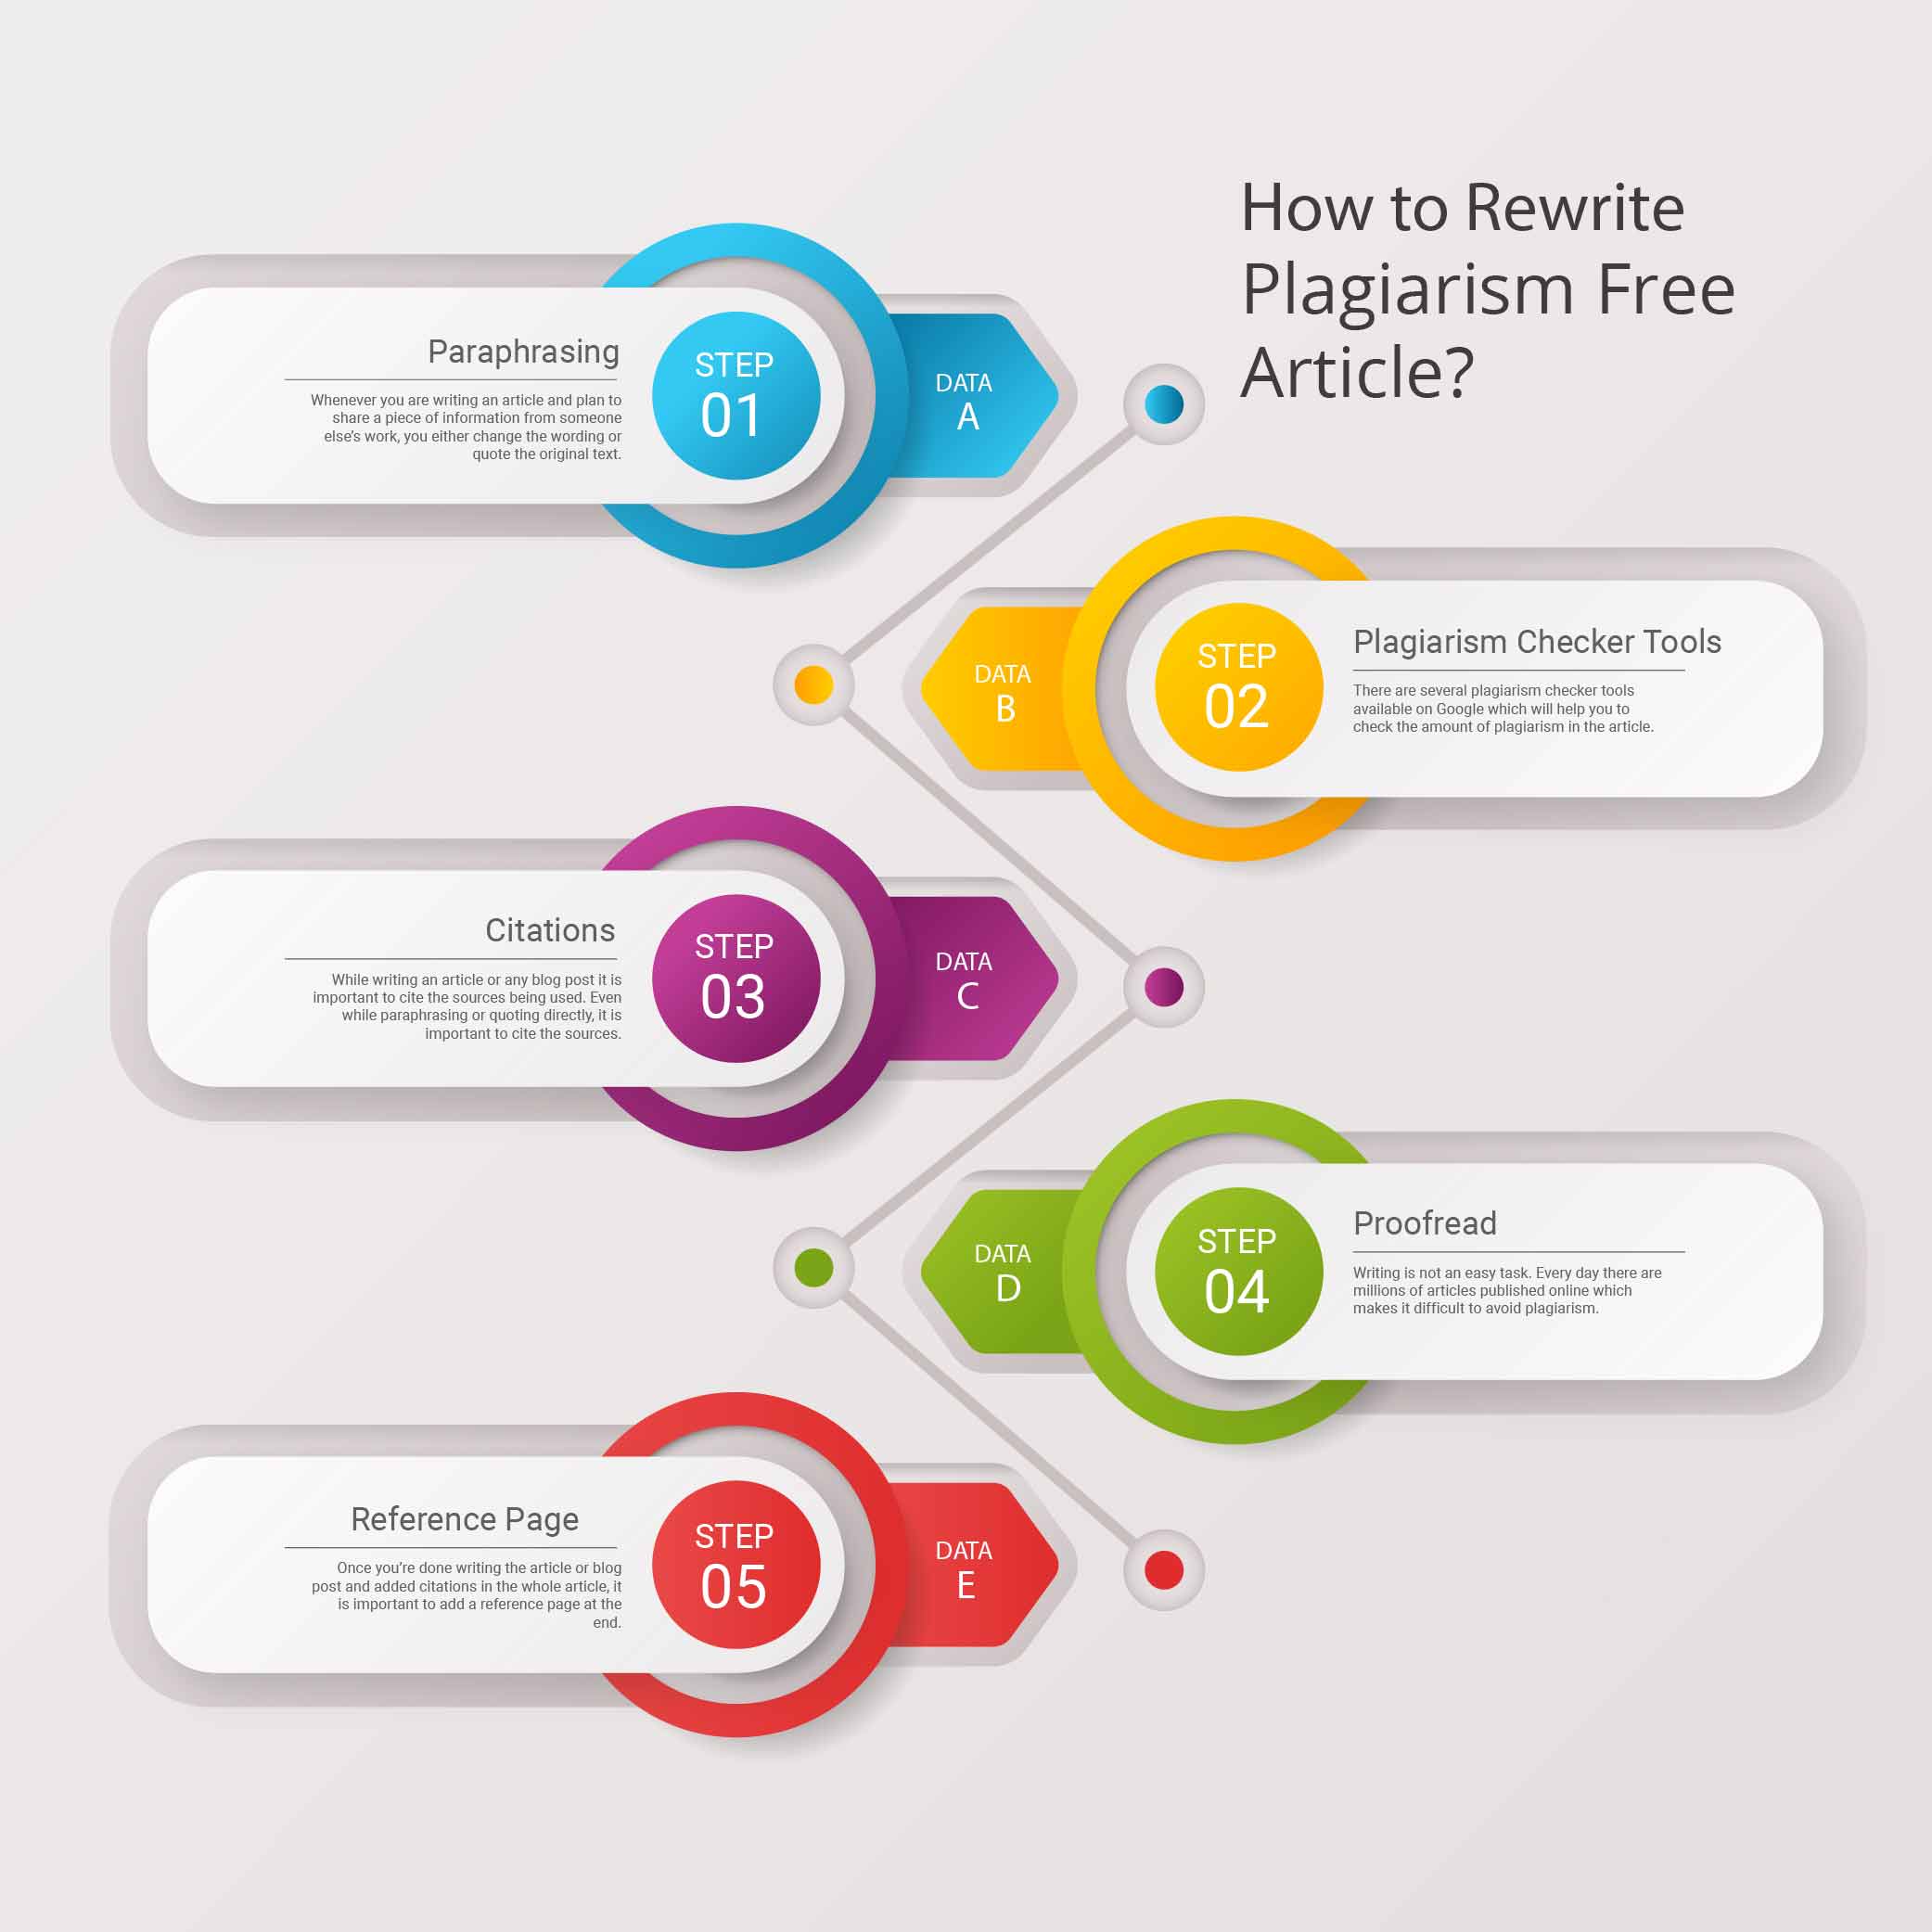 5 steps to rewrite plagiarism